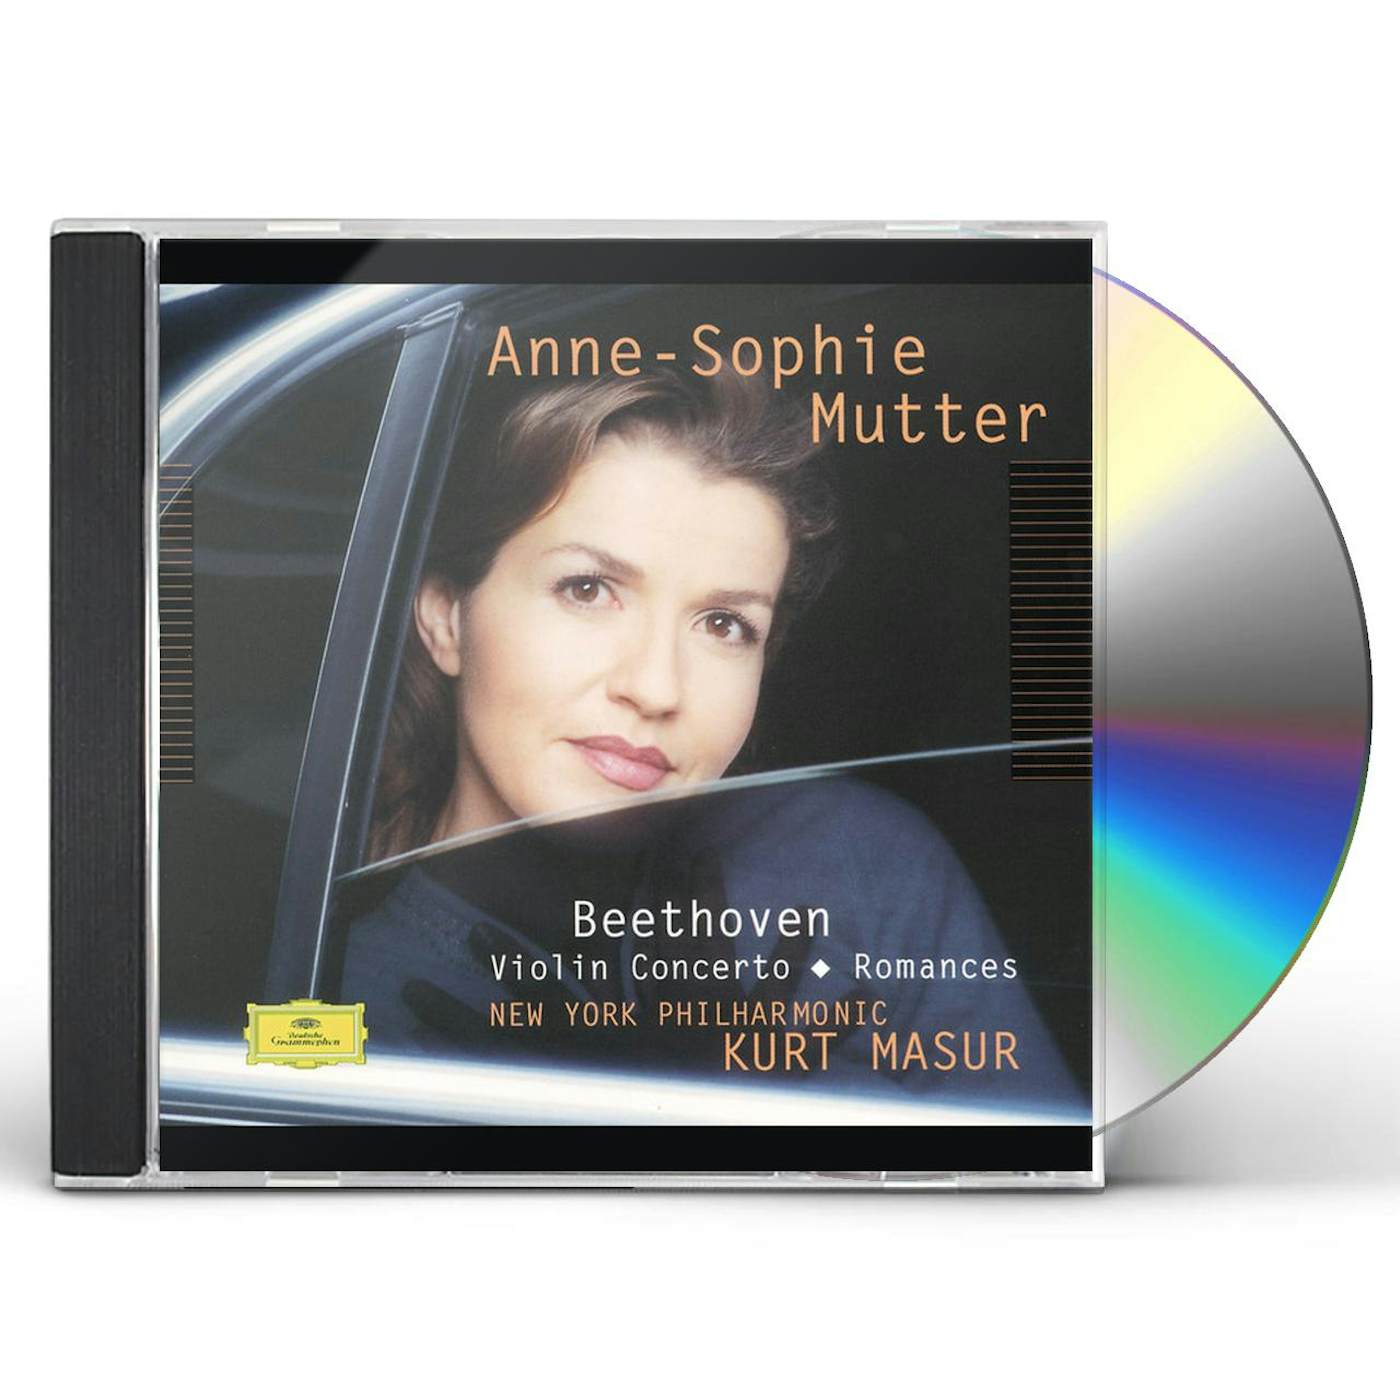 Anne-Sophie Mutter BEETHOVEN: VIOLIN CONCERTO. ROMANCES CD